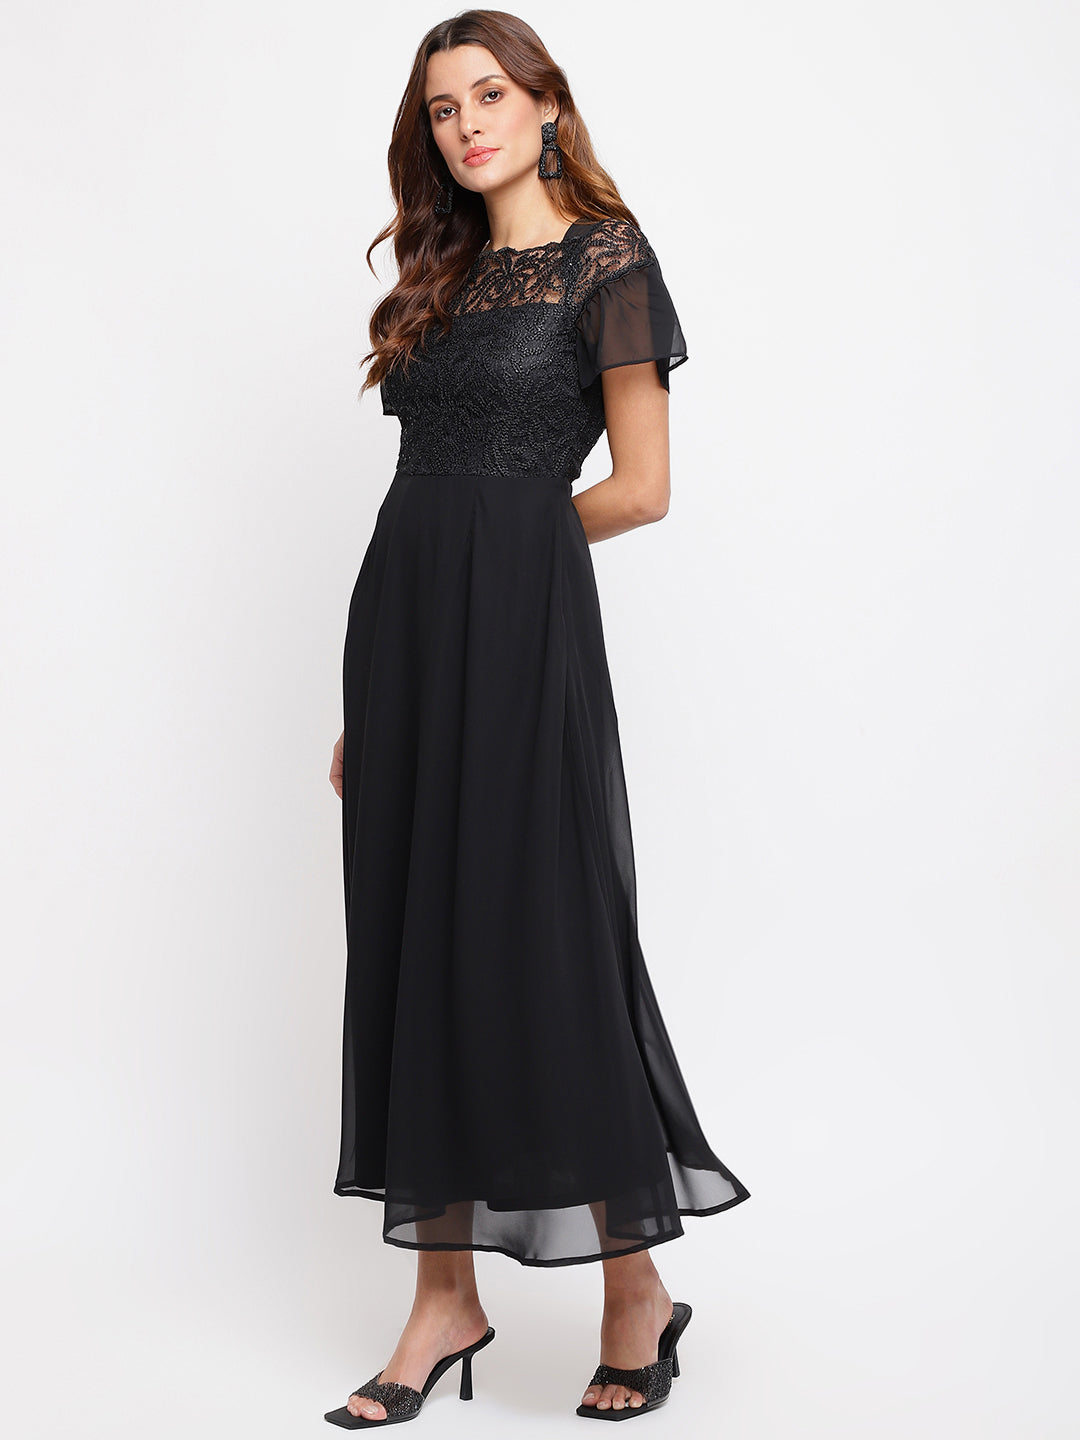 Black Cap Sleeve Embellished Maxi Dress